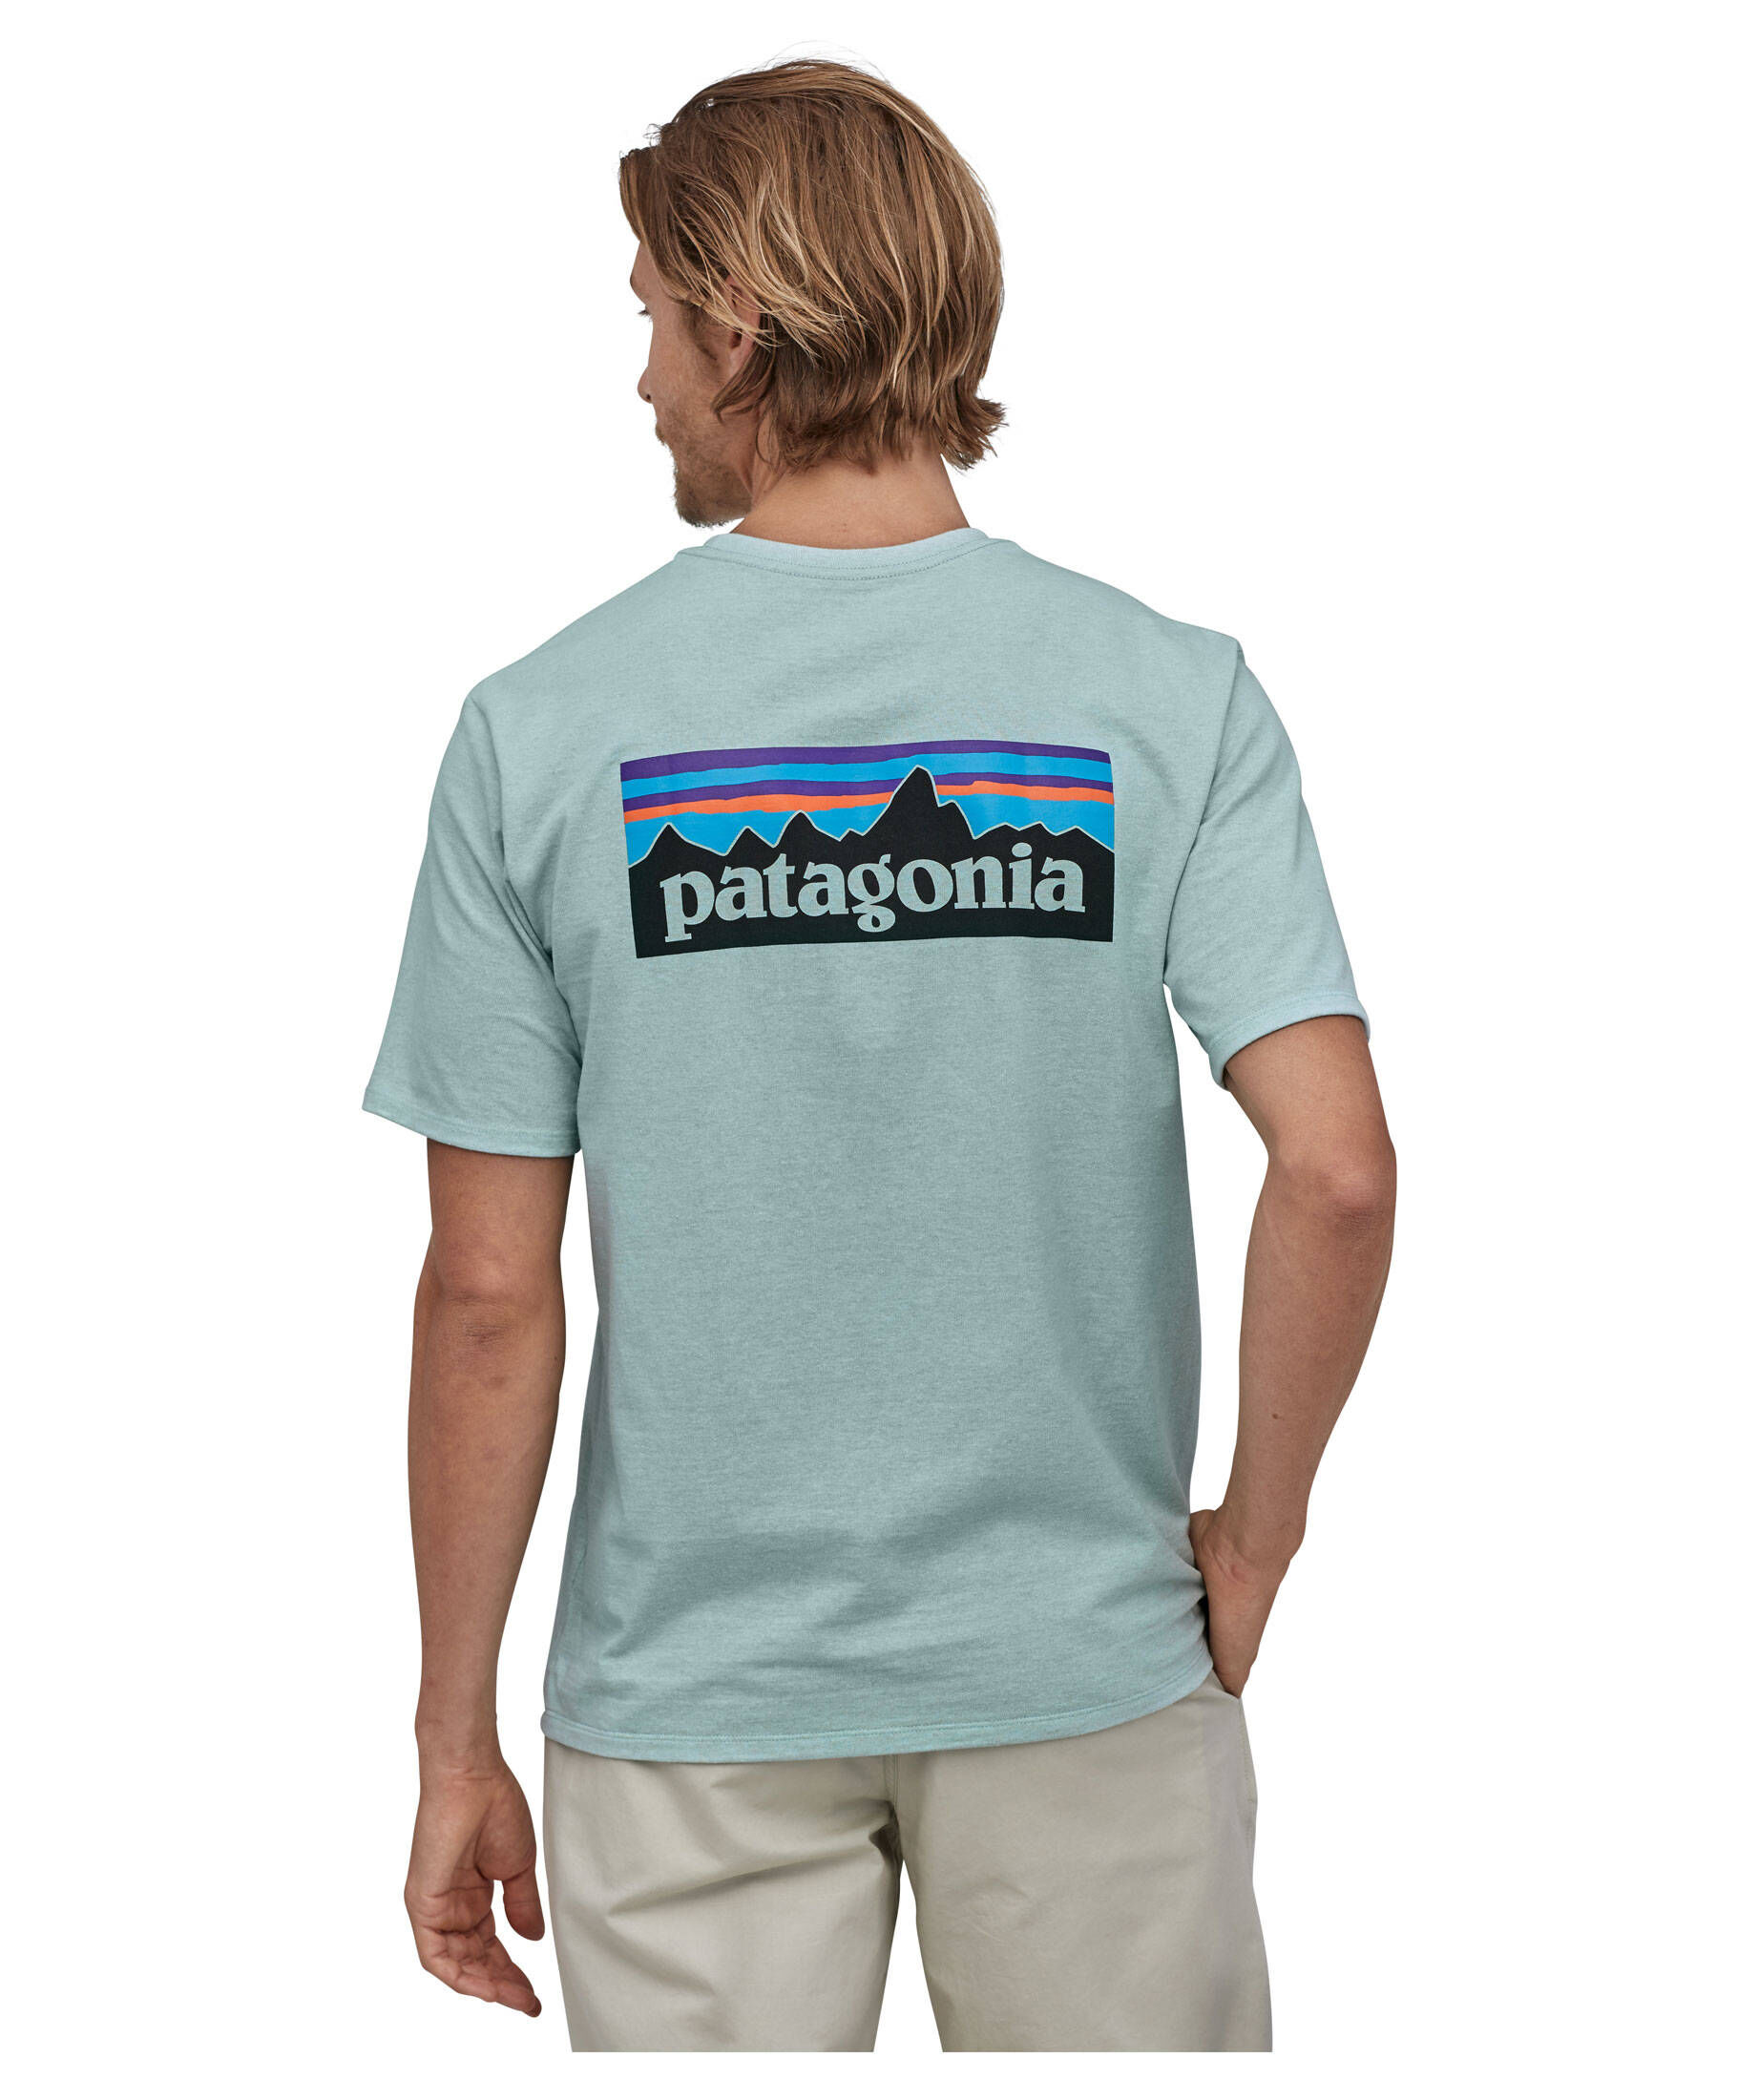 patagonia t shirt on sale